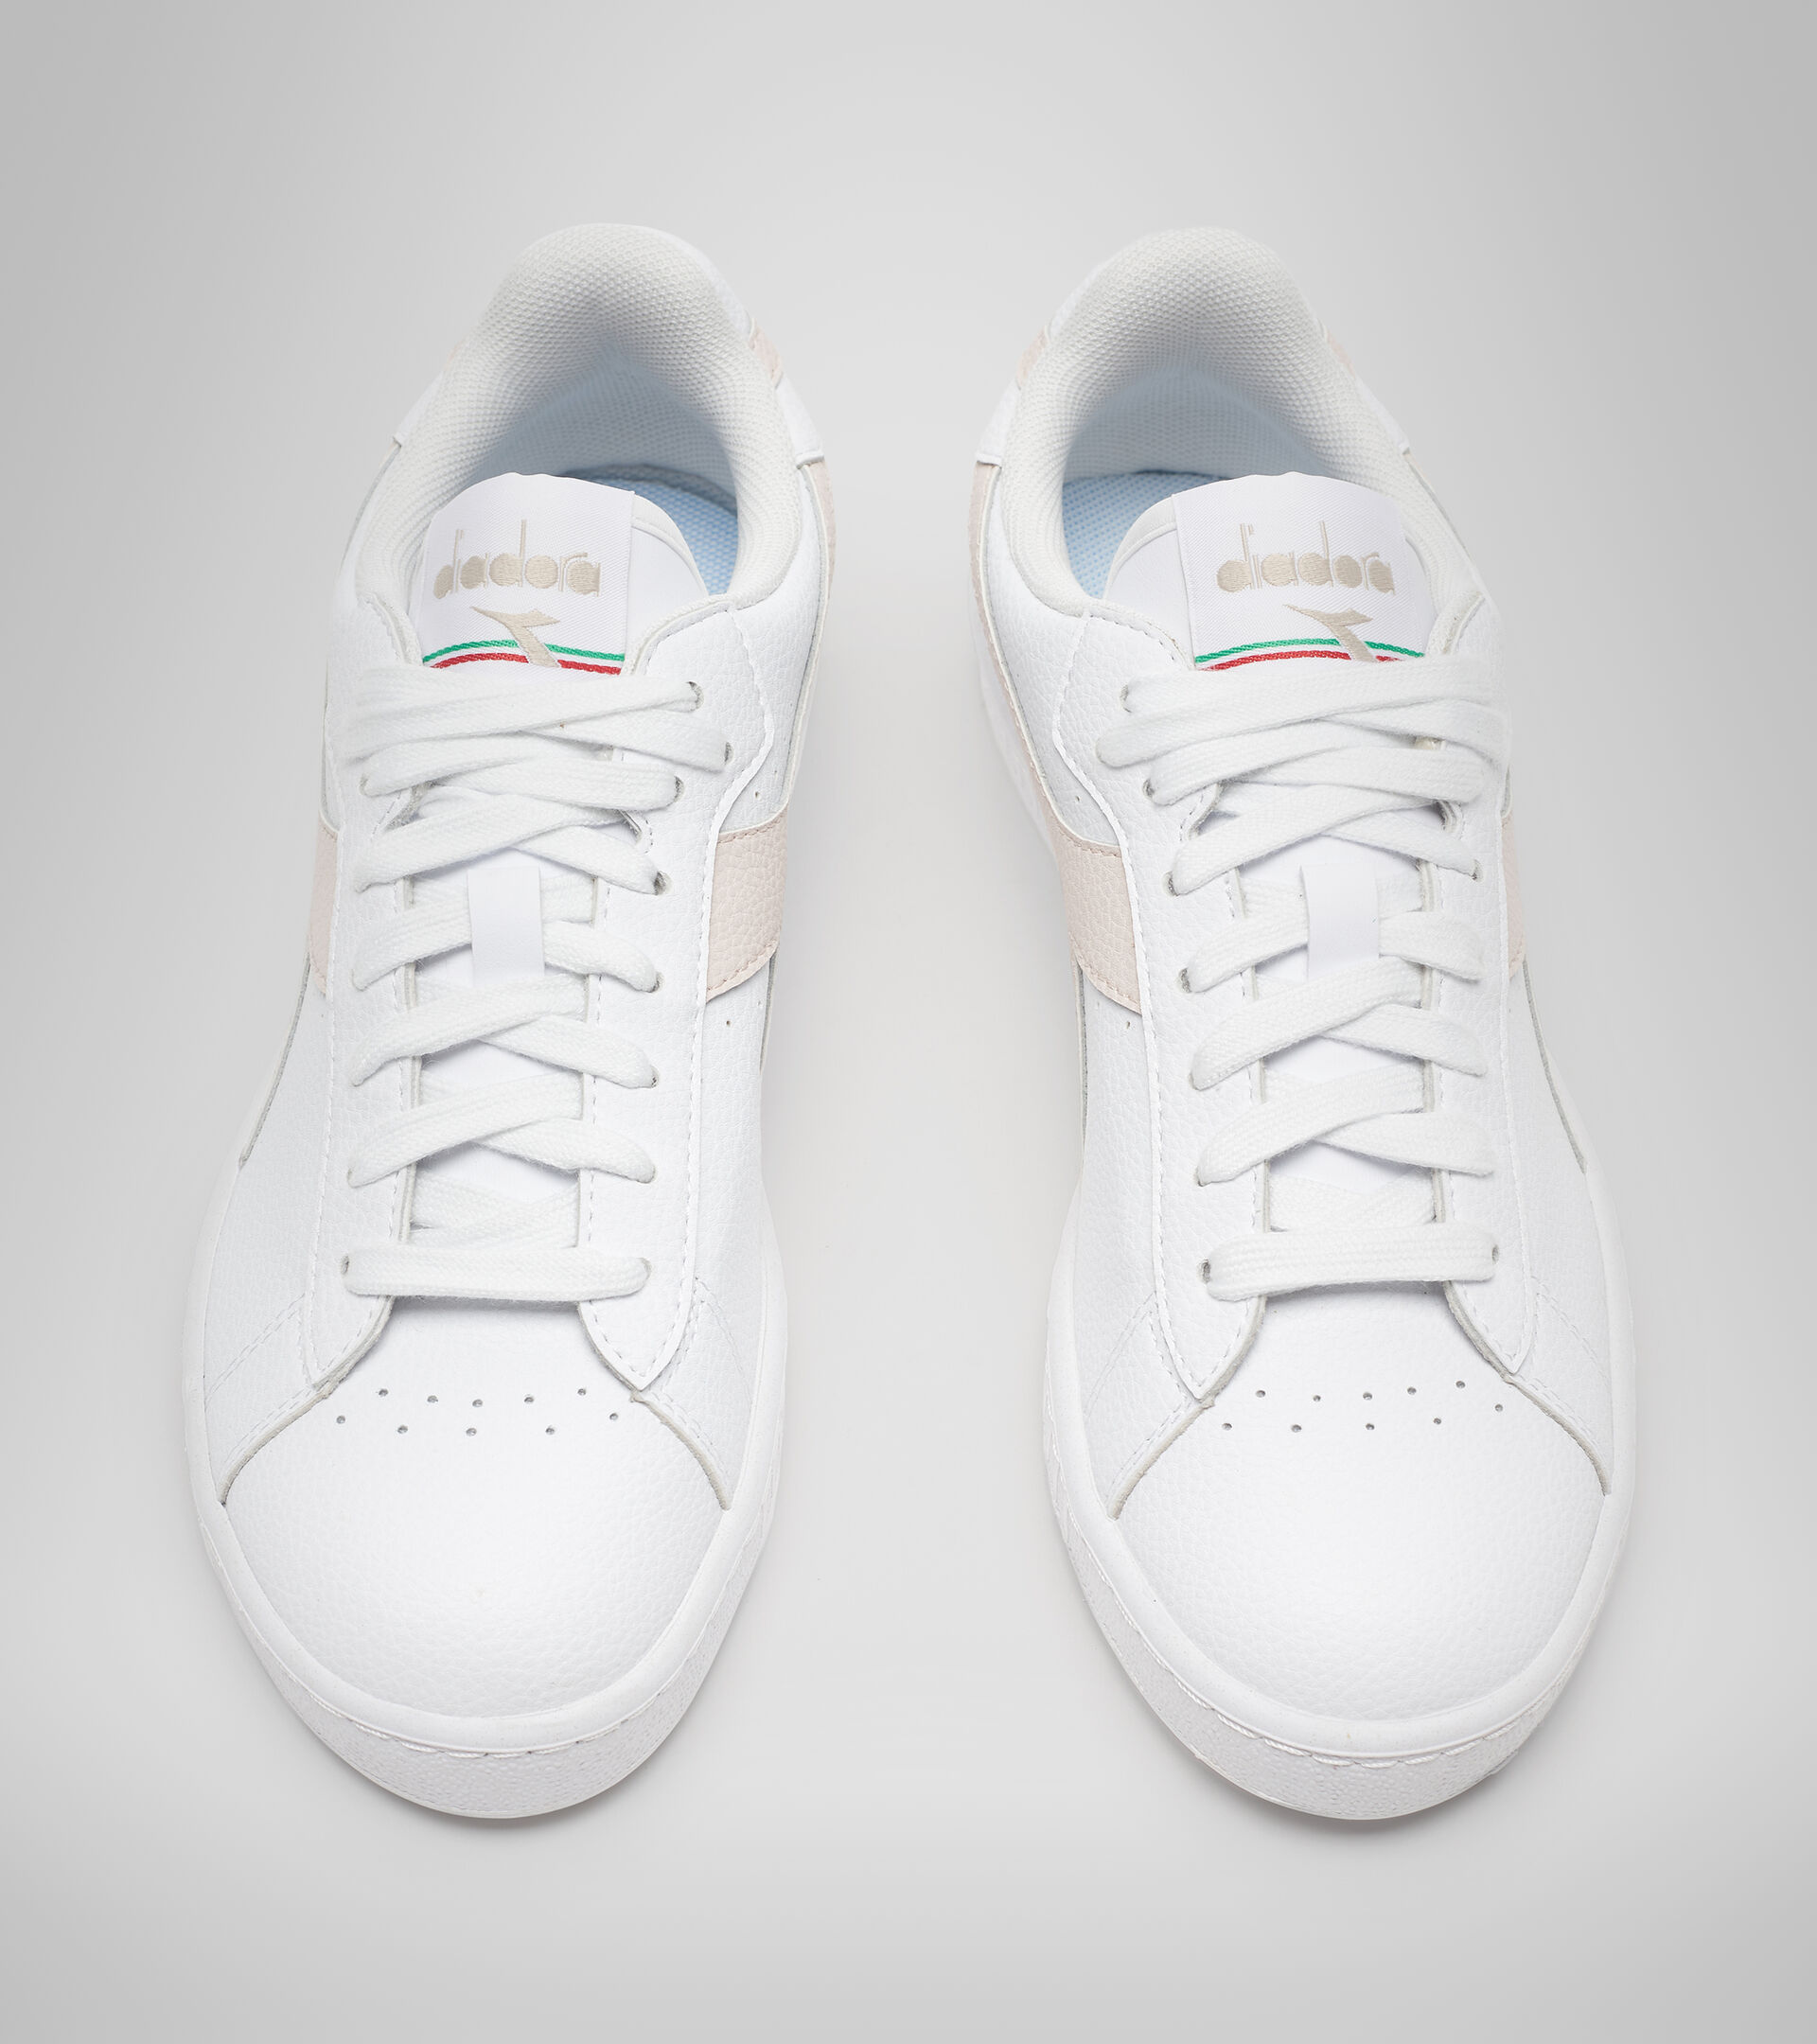 Sportswear shoe - Unisex GAME L LOW 2030 WHITE/CRYSTAL GRAY - Diadora